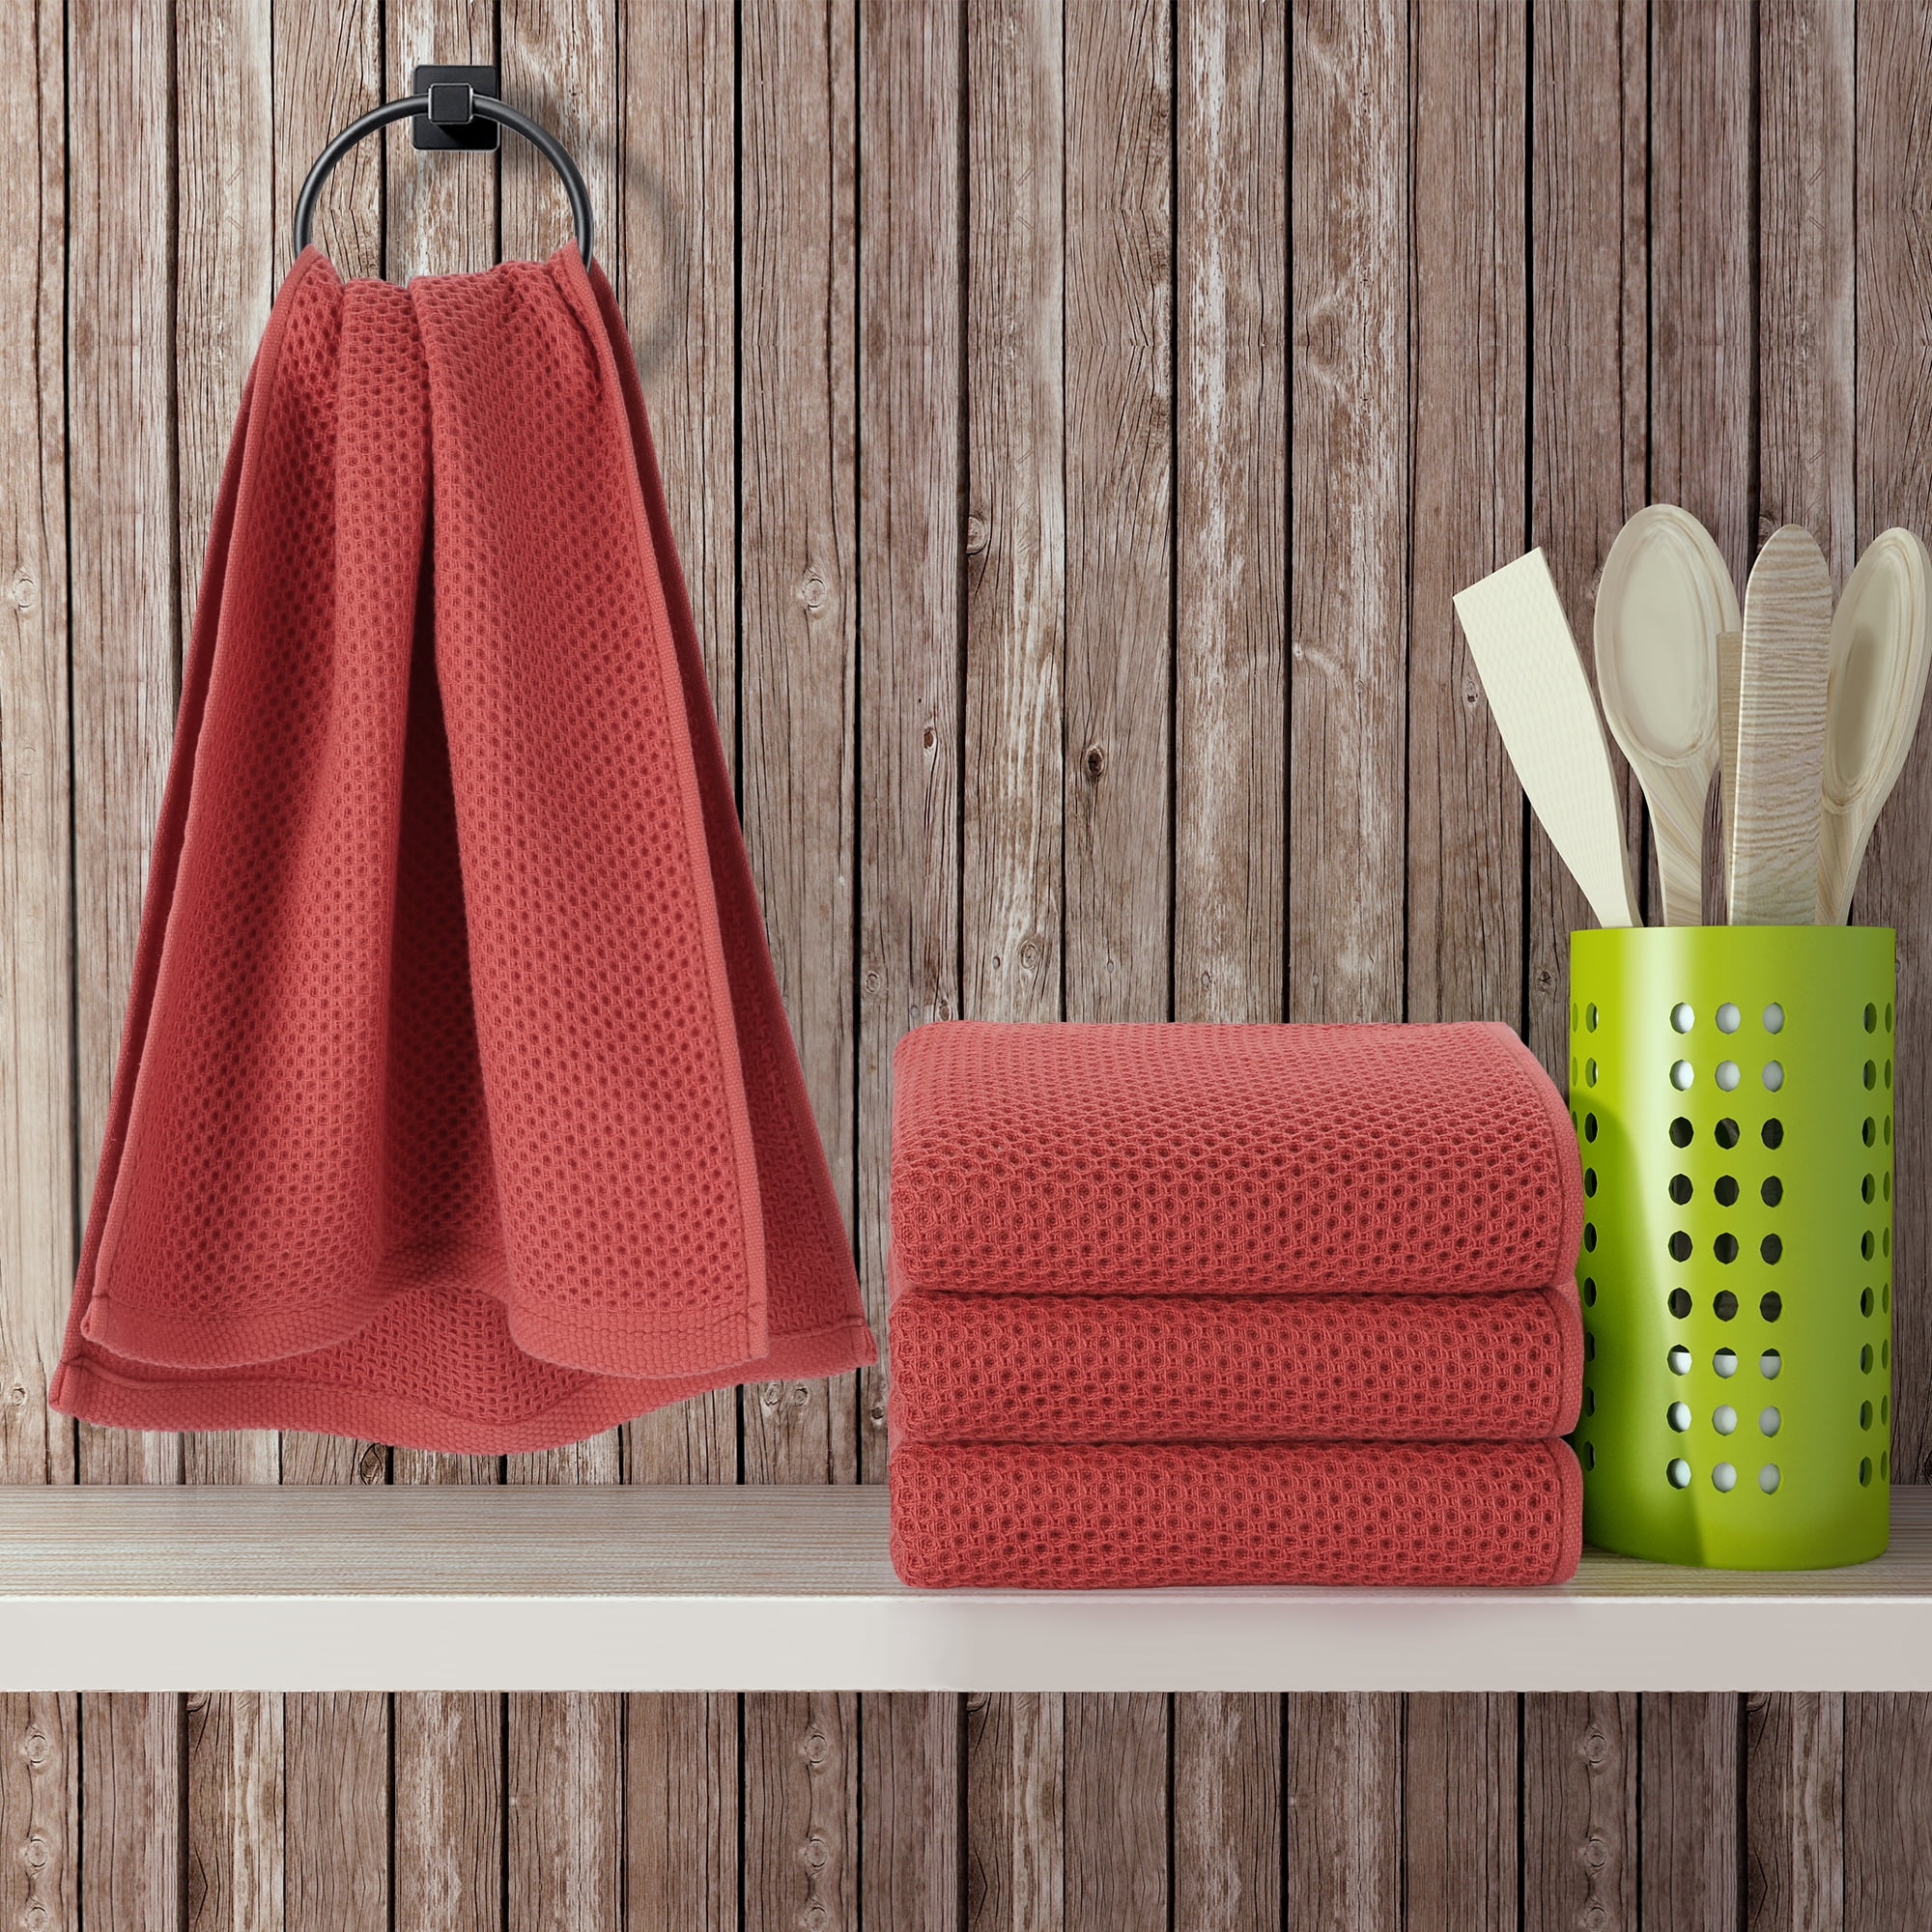 Howarmer Brick Red Kitchen Dish Towels, 100% Cotton Dish Cloths